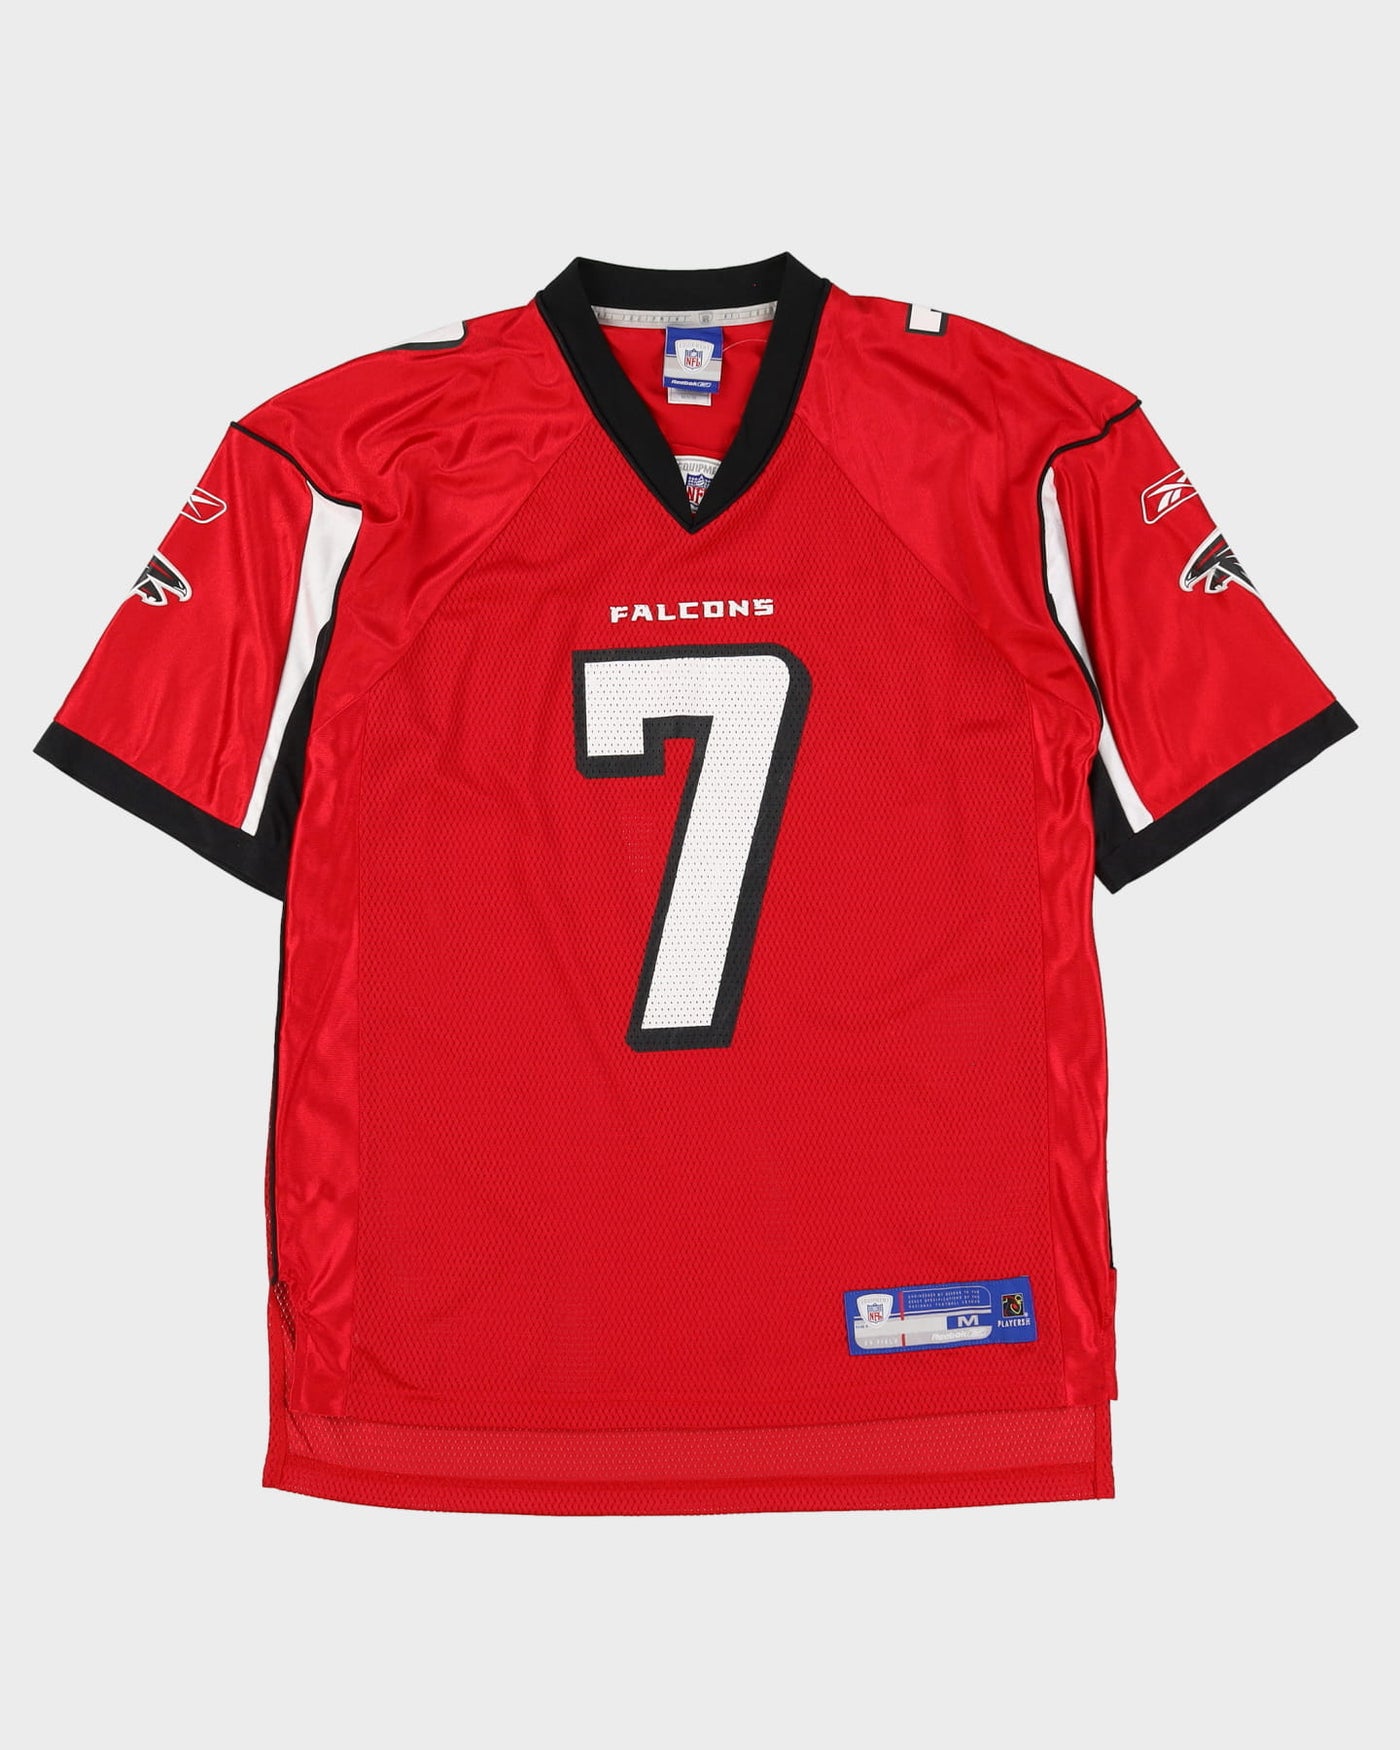 Mike Vick #7 Atlanta Falcons Red / Black Reebok NFL Oversized Jersey - M